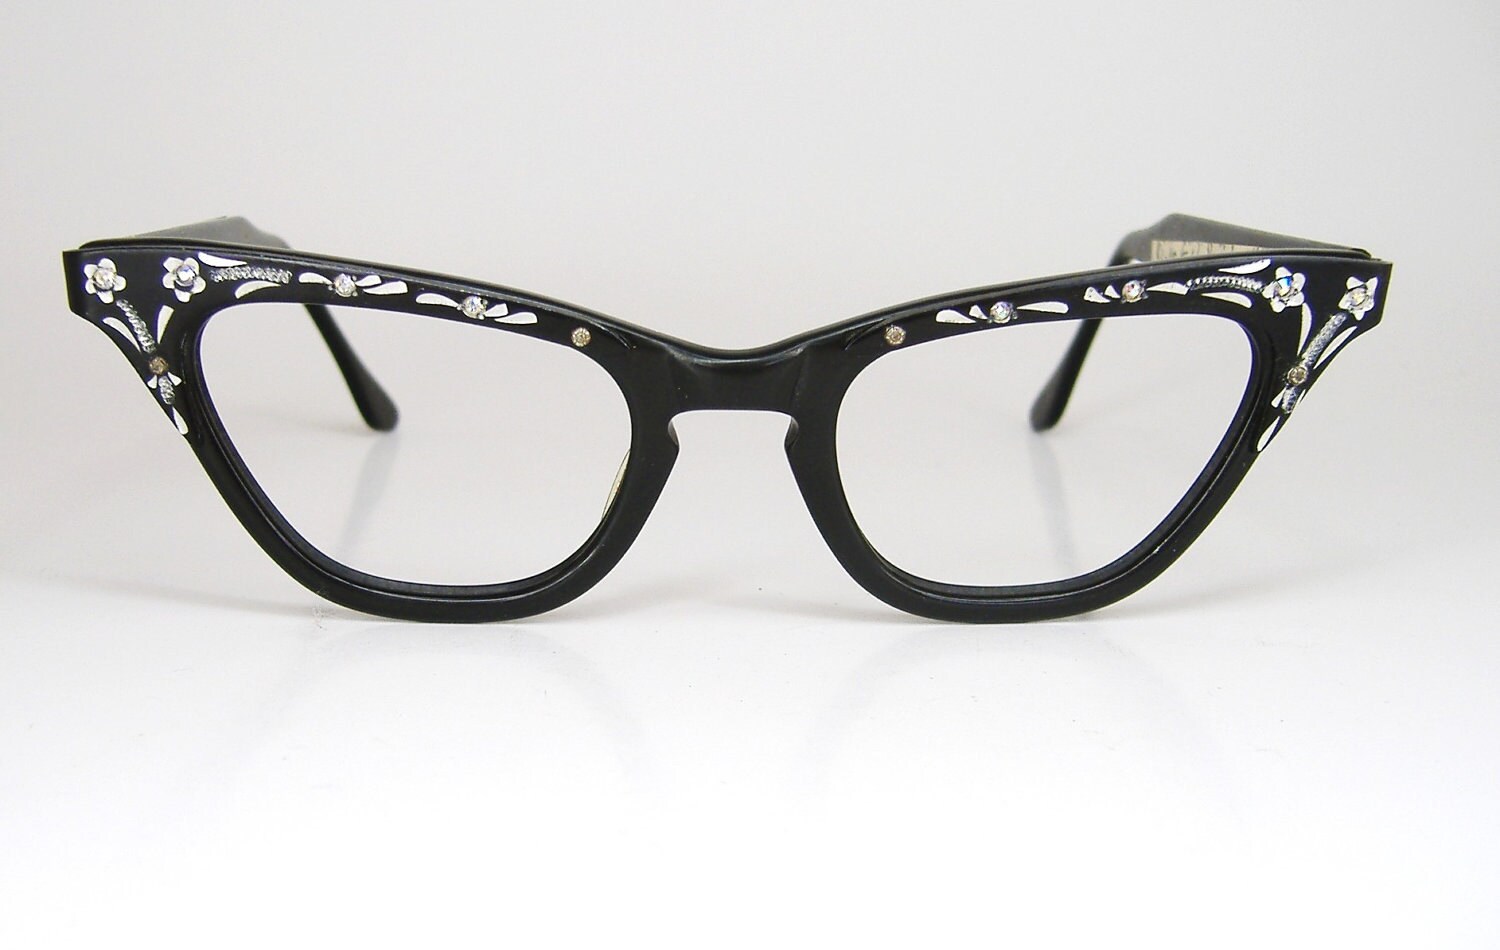 Vintage 50s Black Cat Eye Eyeglasses Frame With Flowers and